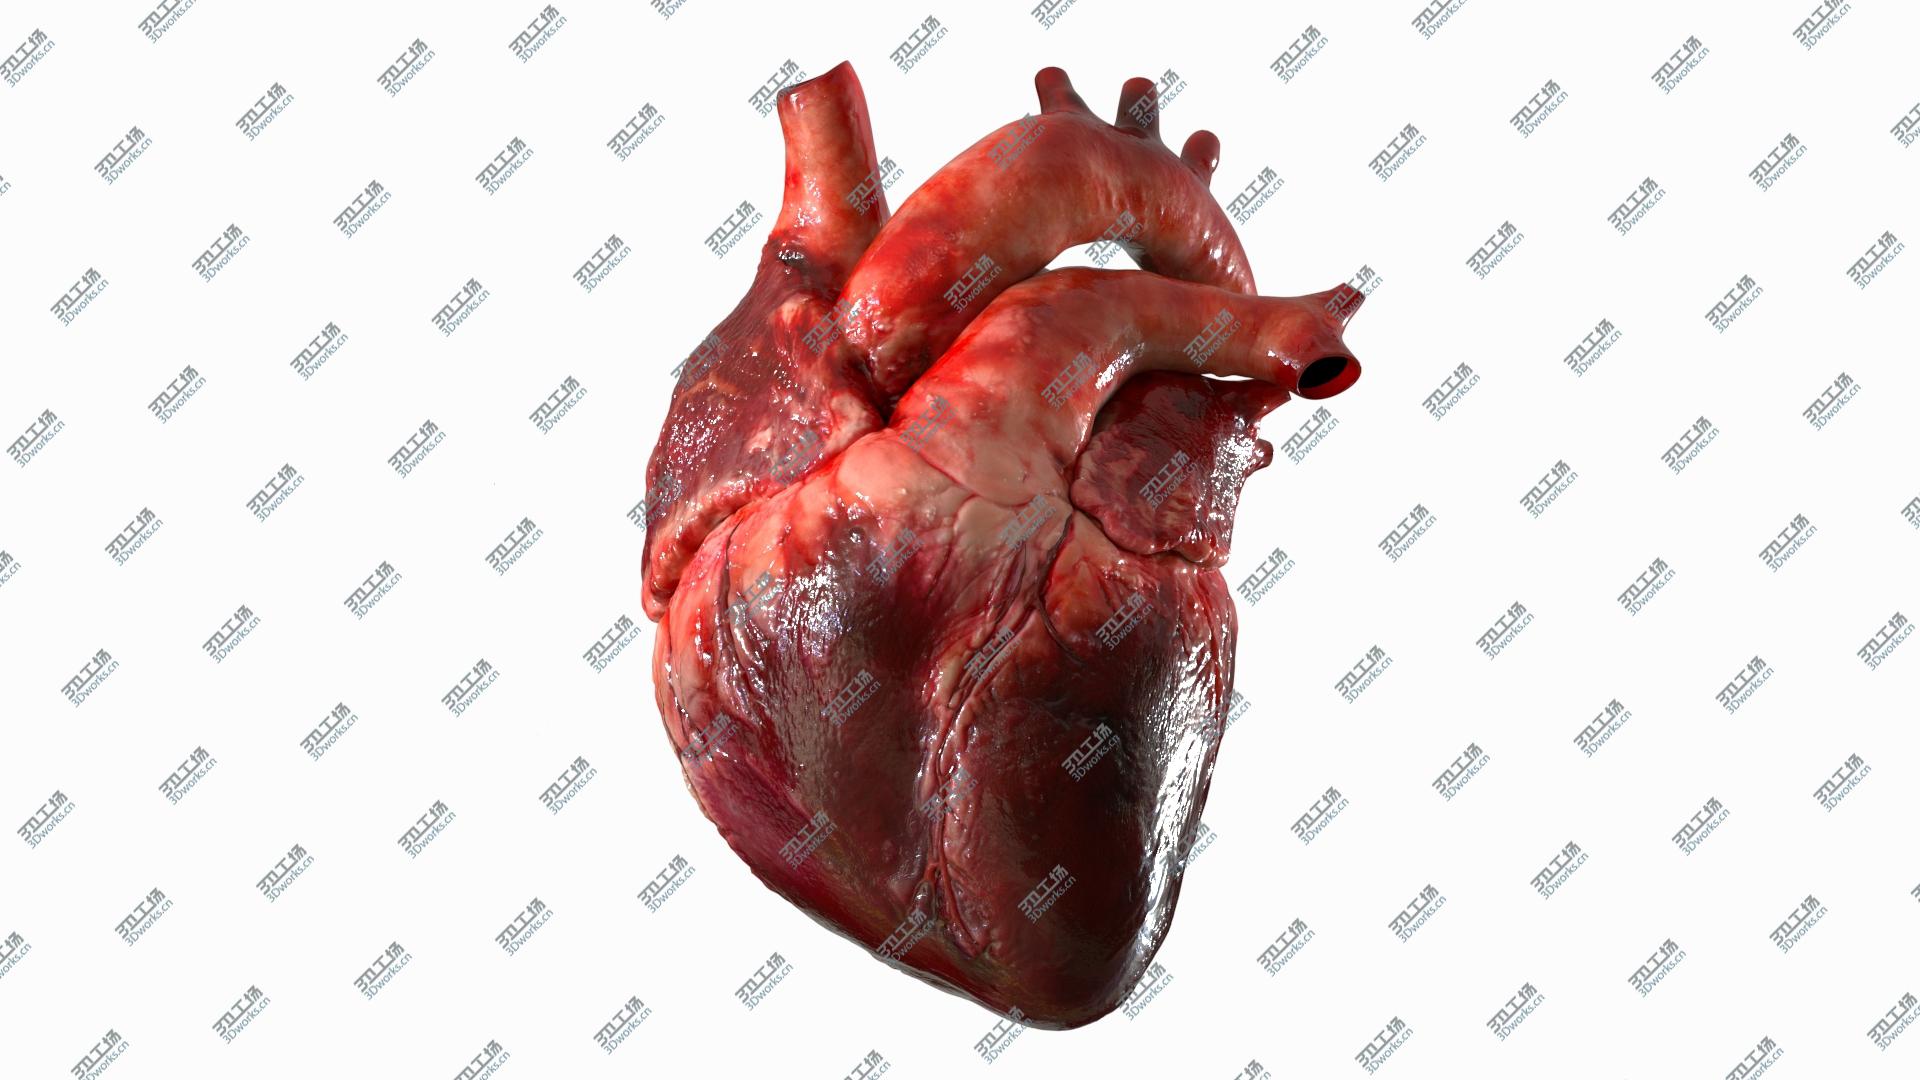 images/goods_img/20210113/3D Human Heart Anatomy (Animation) model/3.jpg